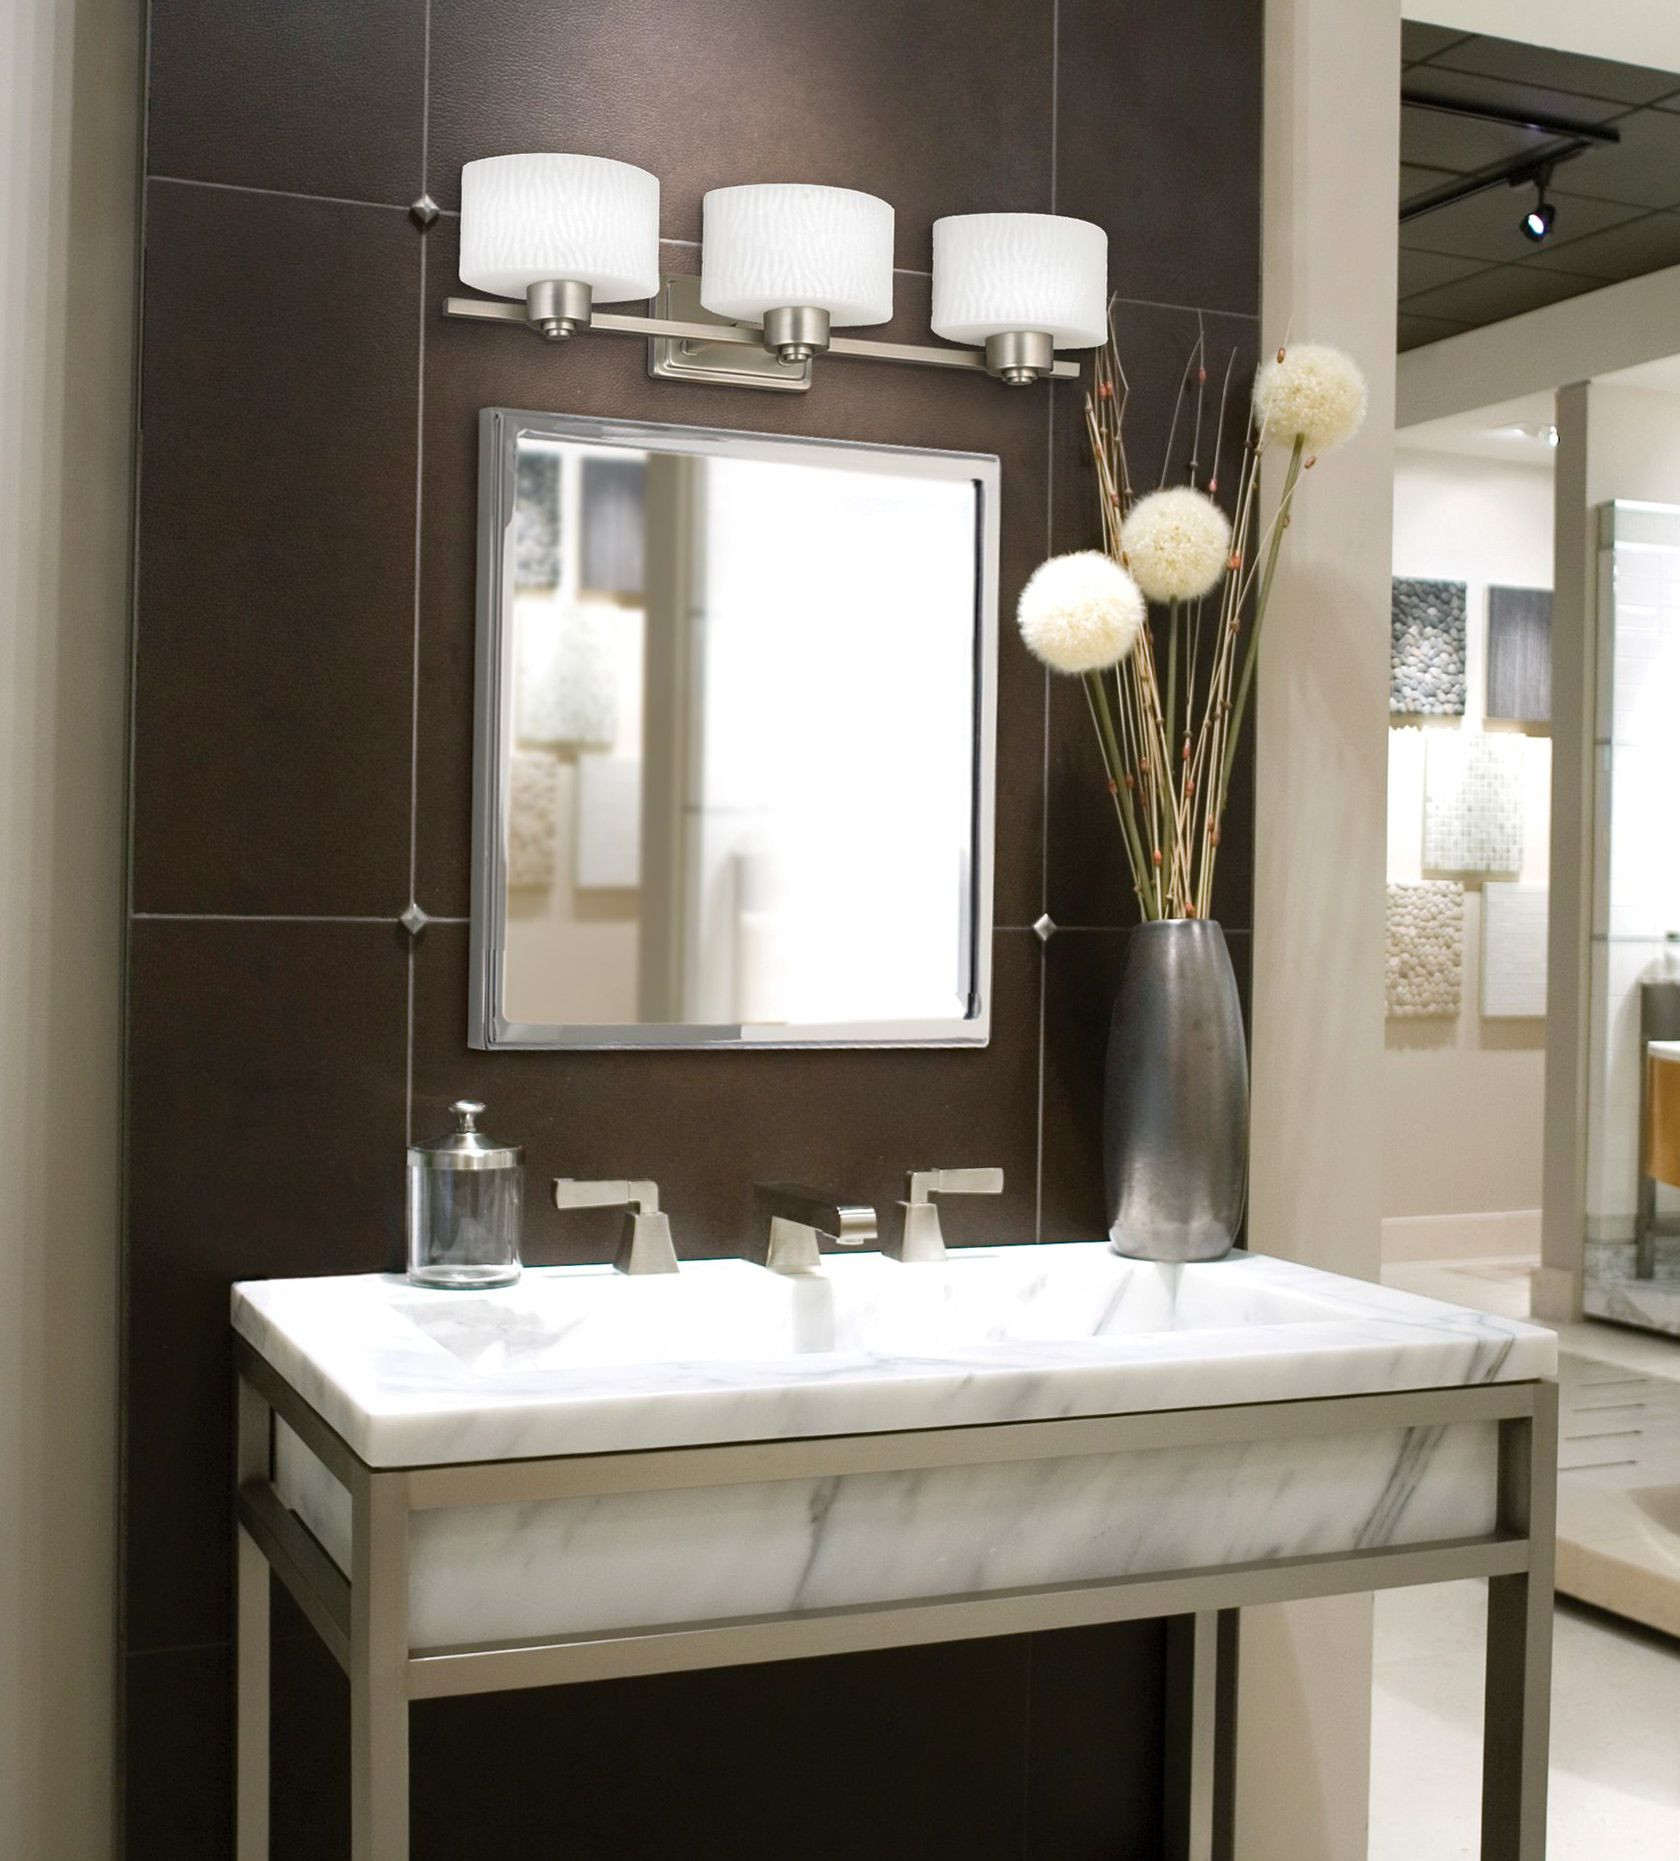 Bathroom Vanity Mirror Lights
 Things You Haven’t Known Before About Bathroom Vanity